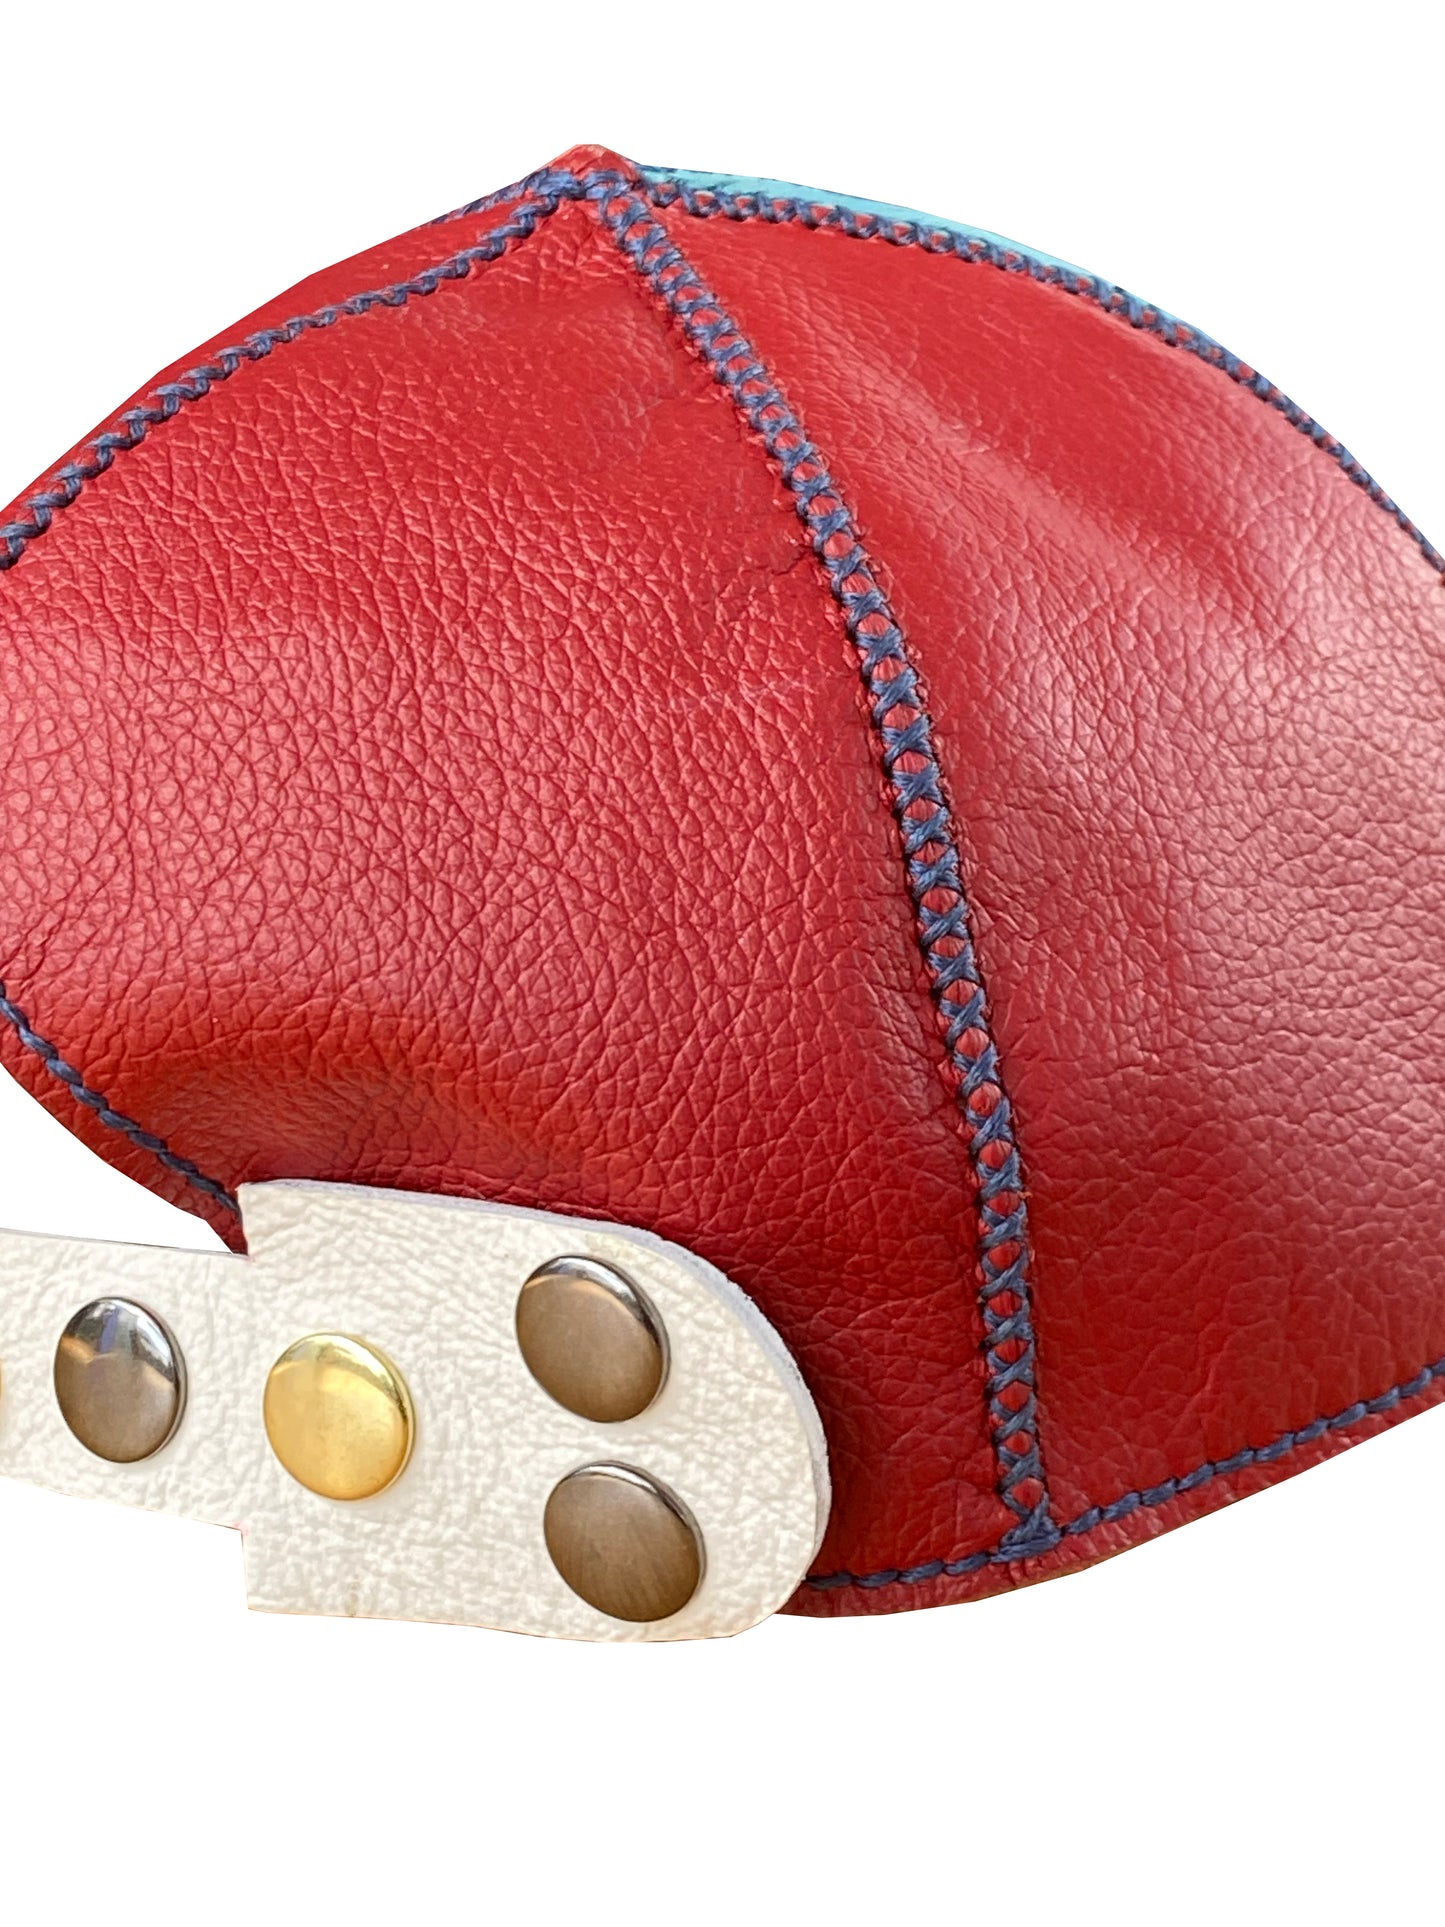 Red & Blue  Artisanal Deadstock Leather Cap